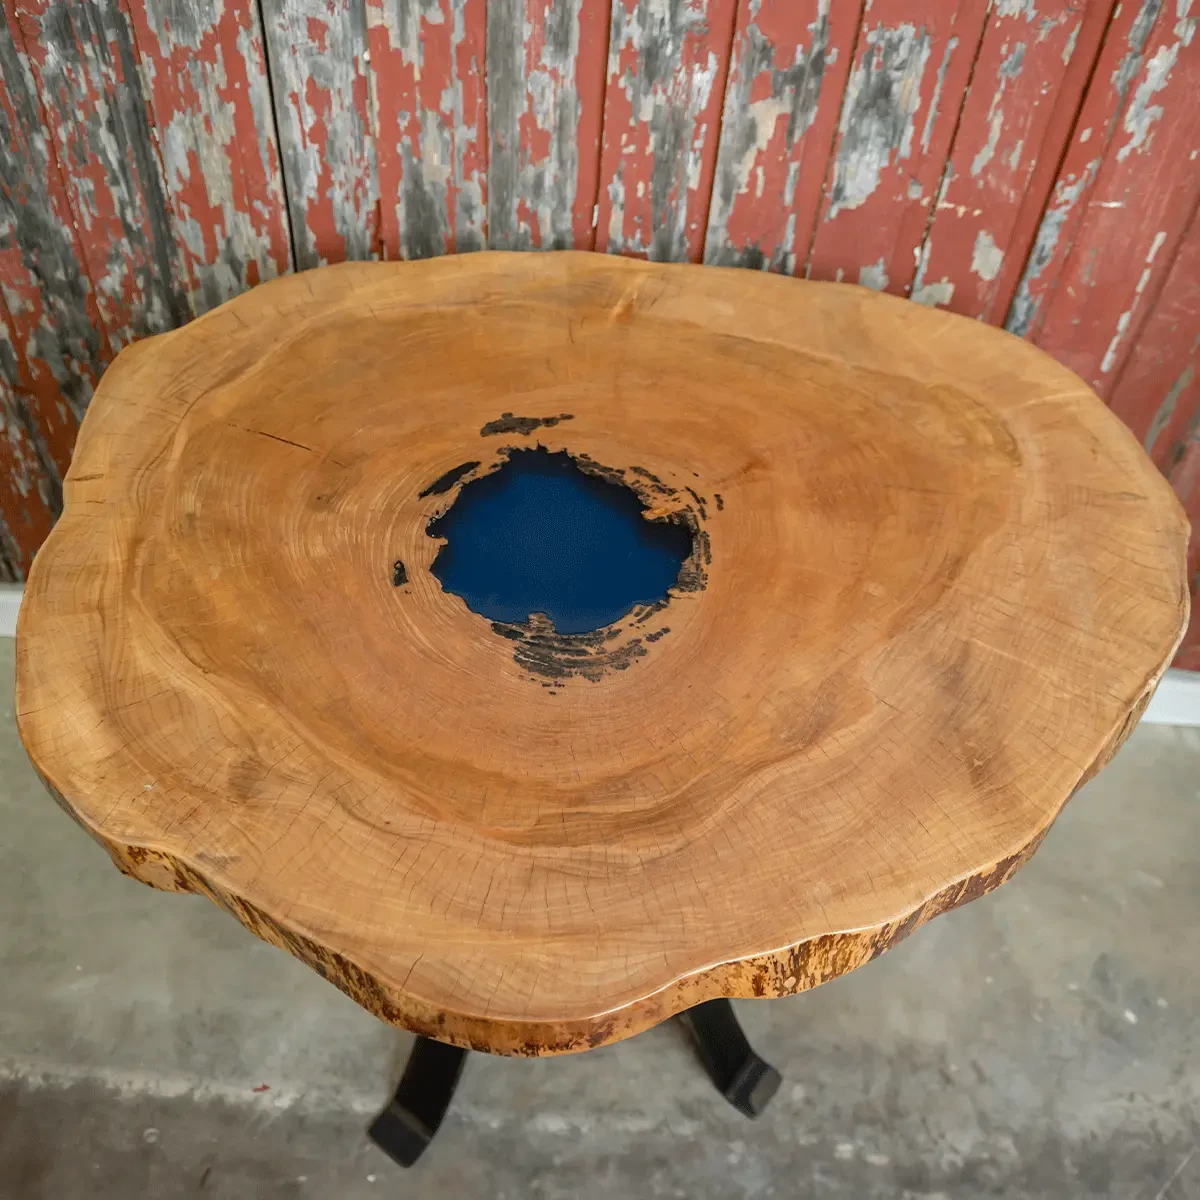 blue epoxy resin pond cafe table